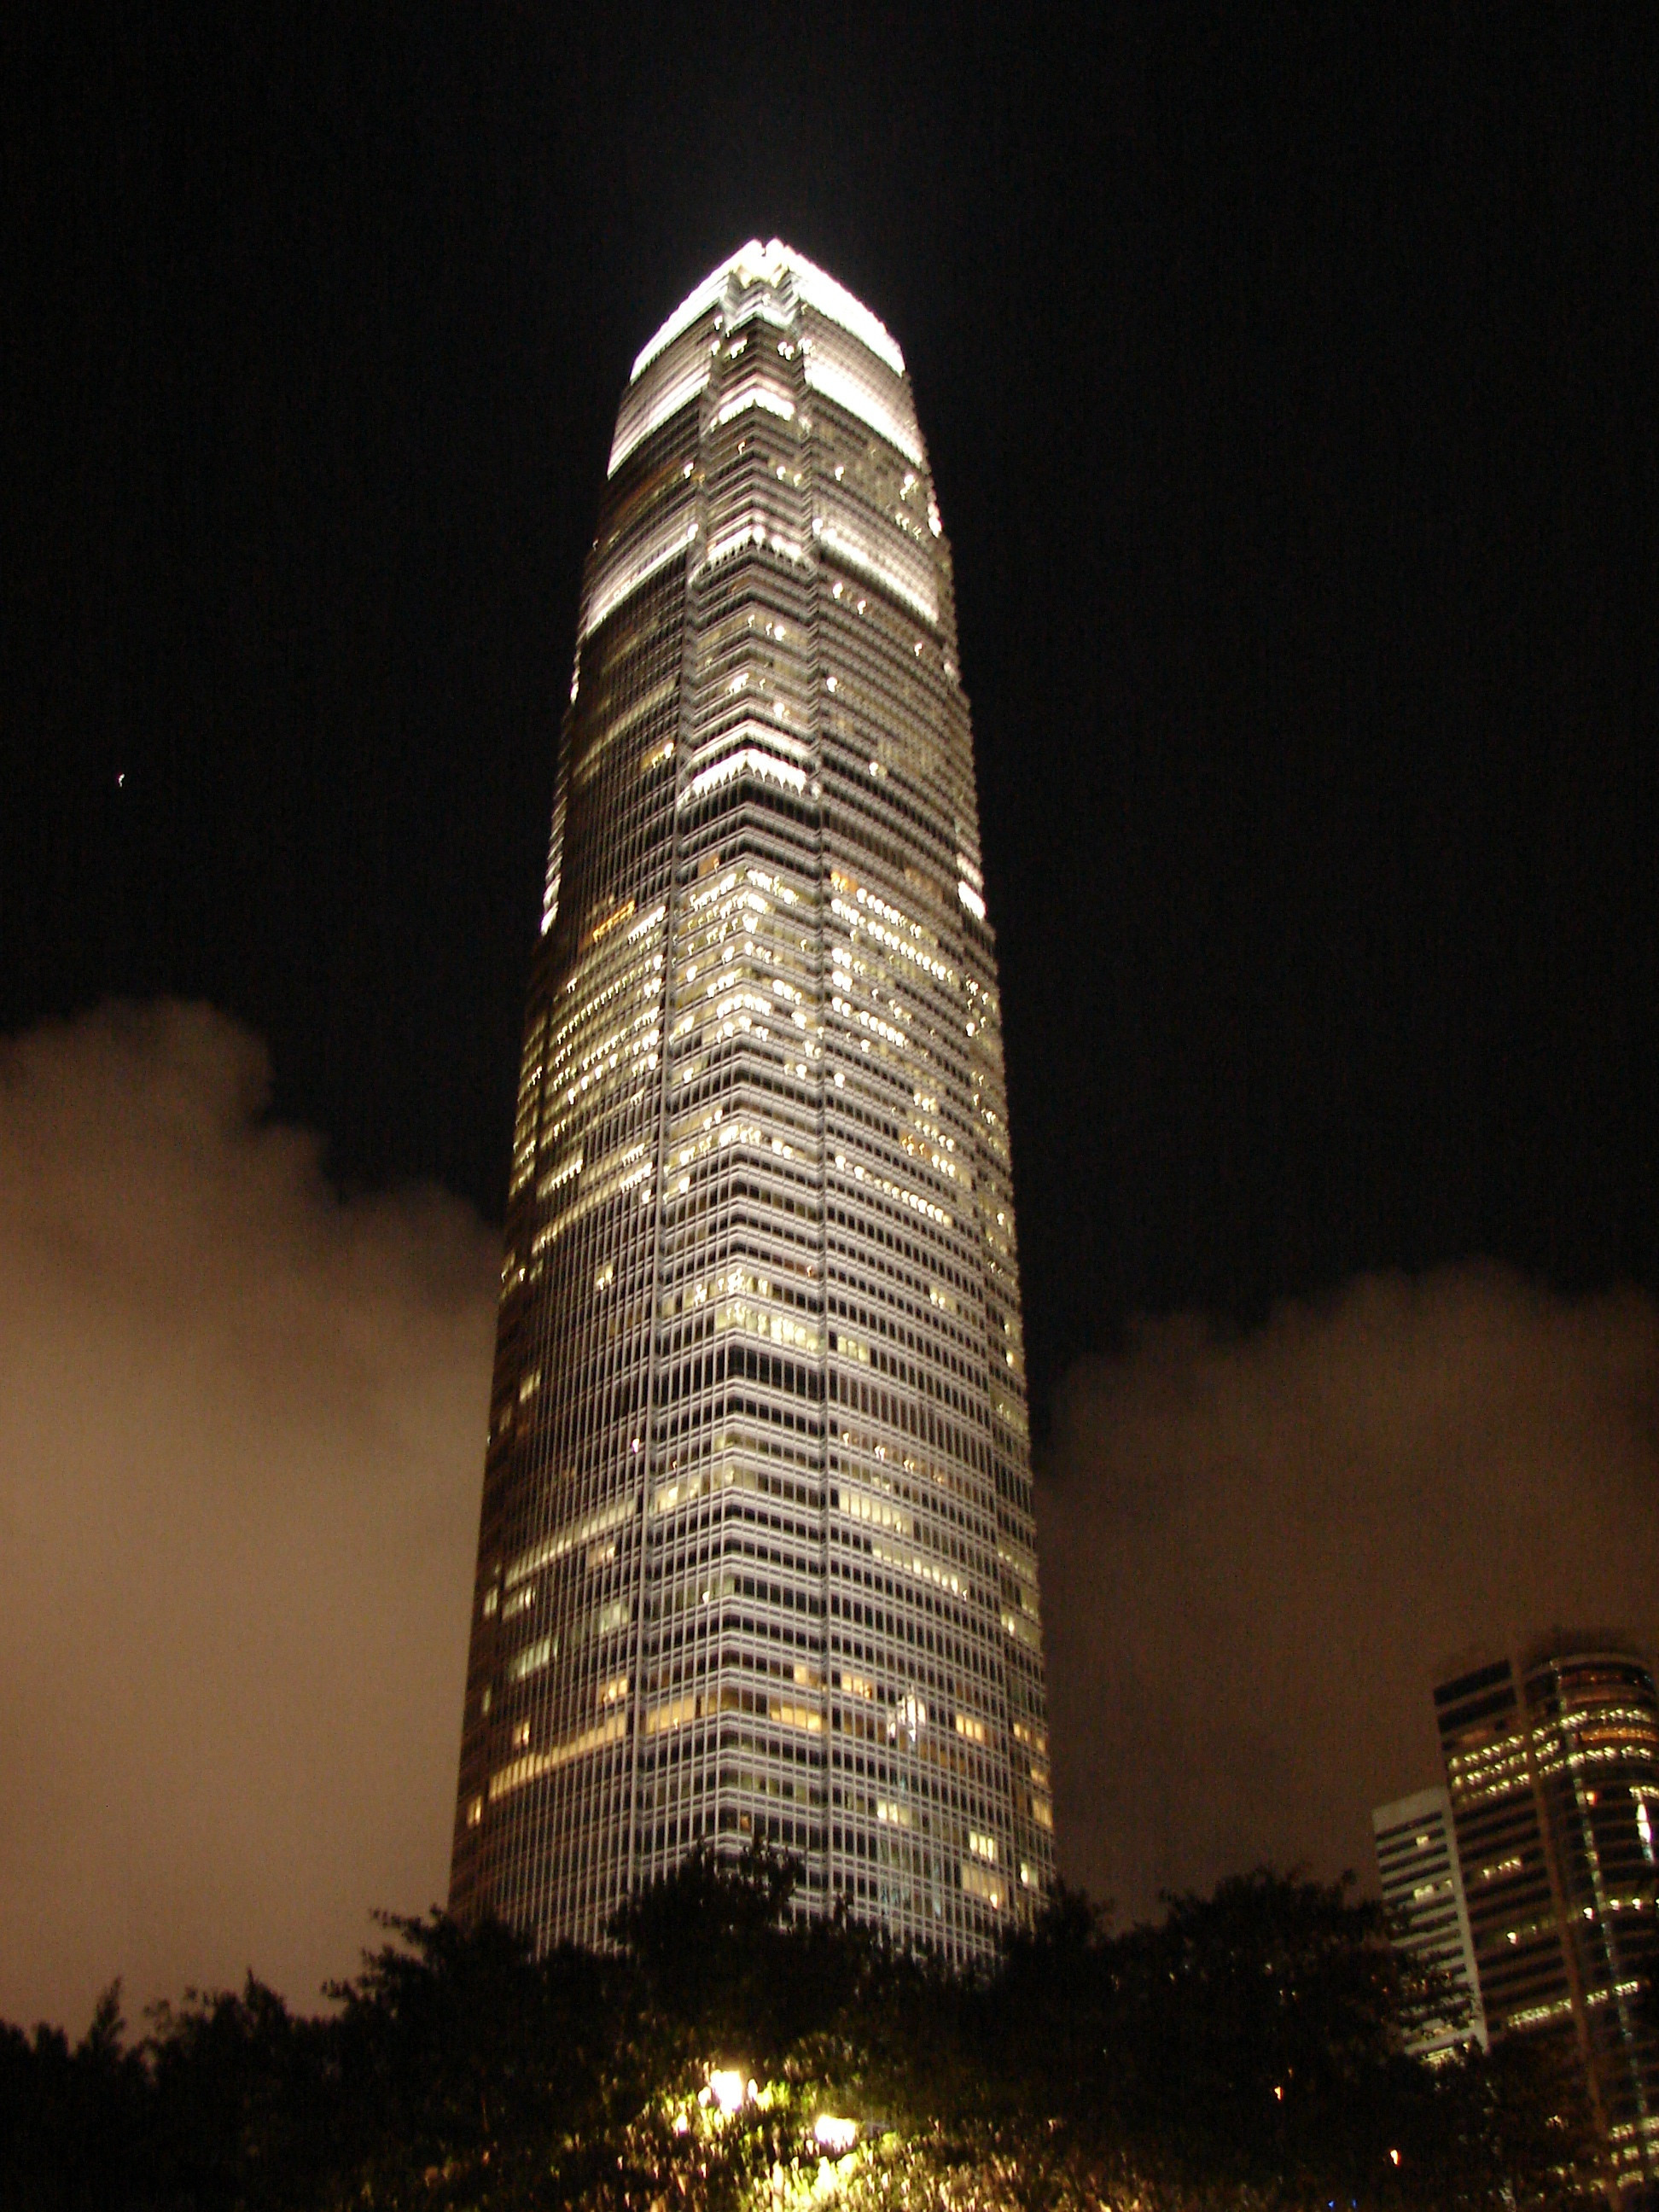 IFC Tower by night